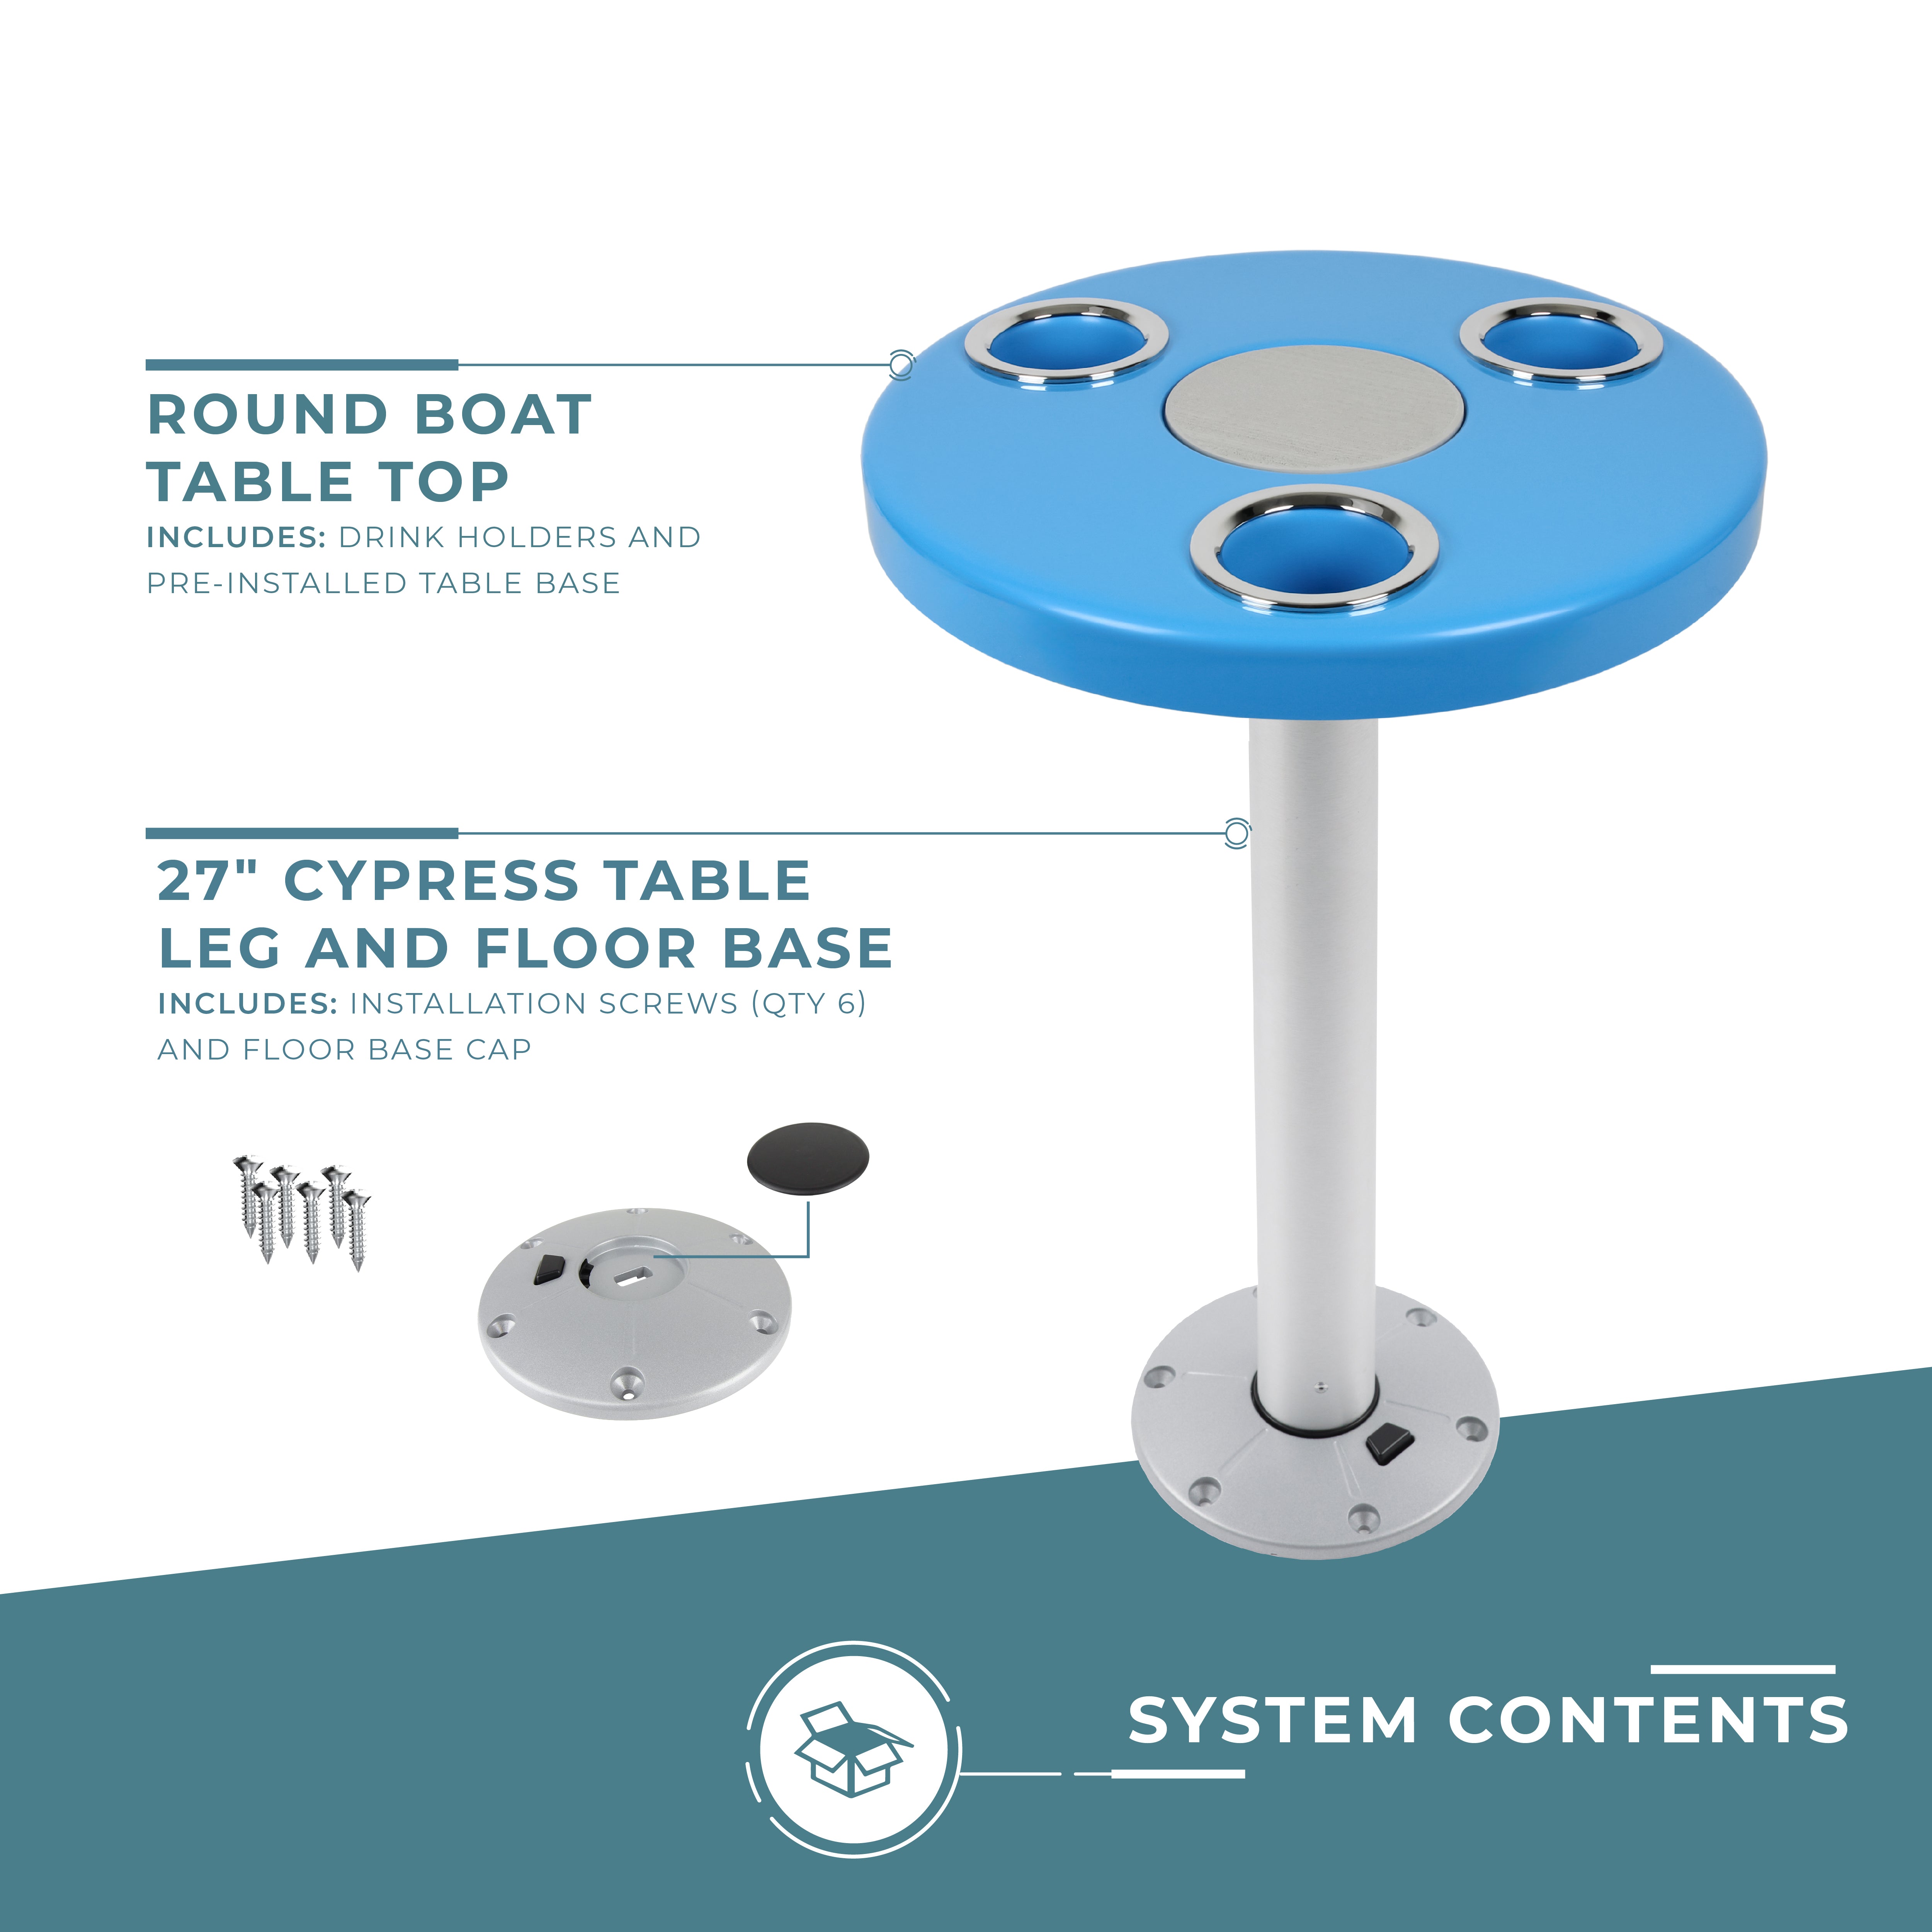 Aqua Blue Round Boat Table System